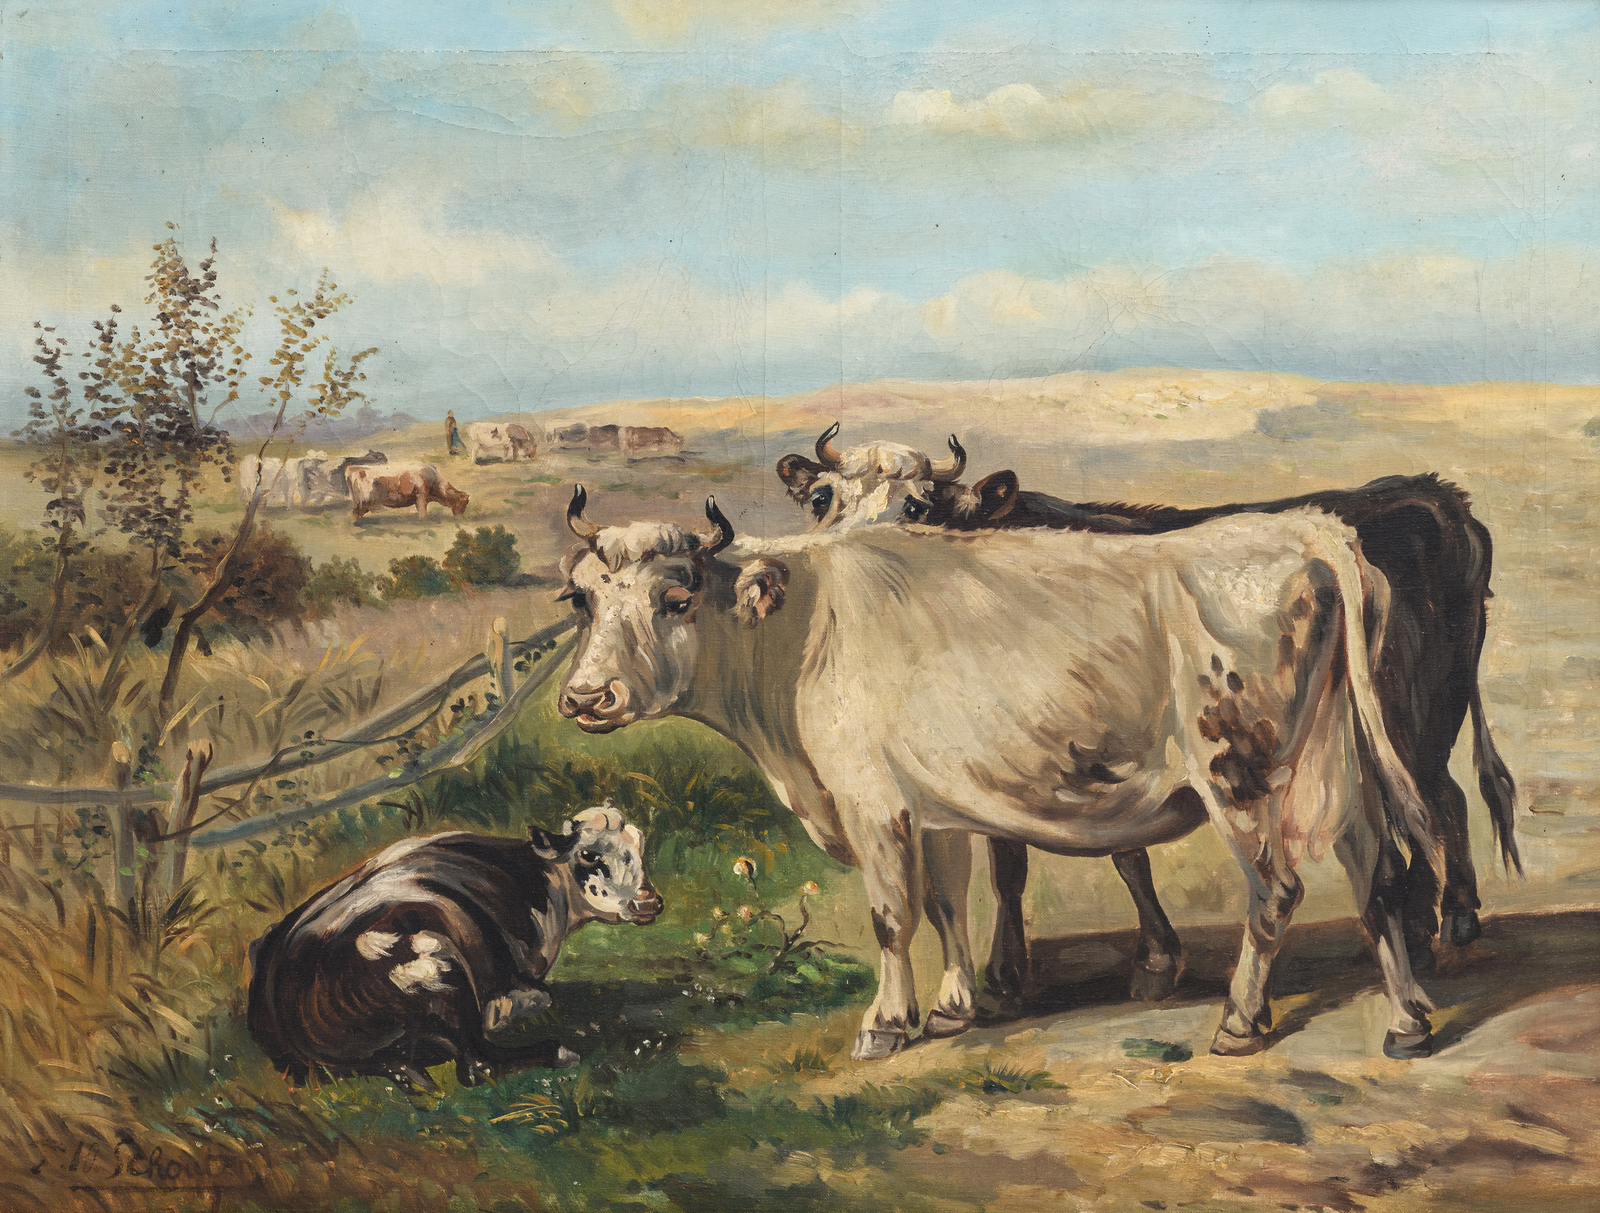 Schouten P., cattle in a landscape, oil on canvas, 65 x 85 cm